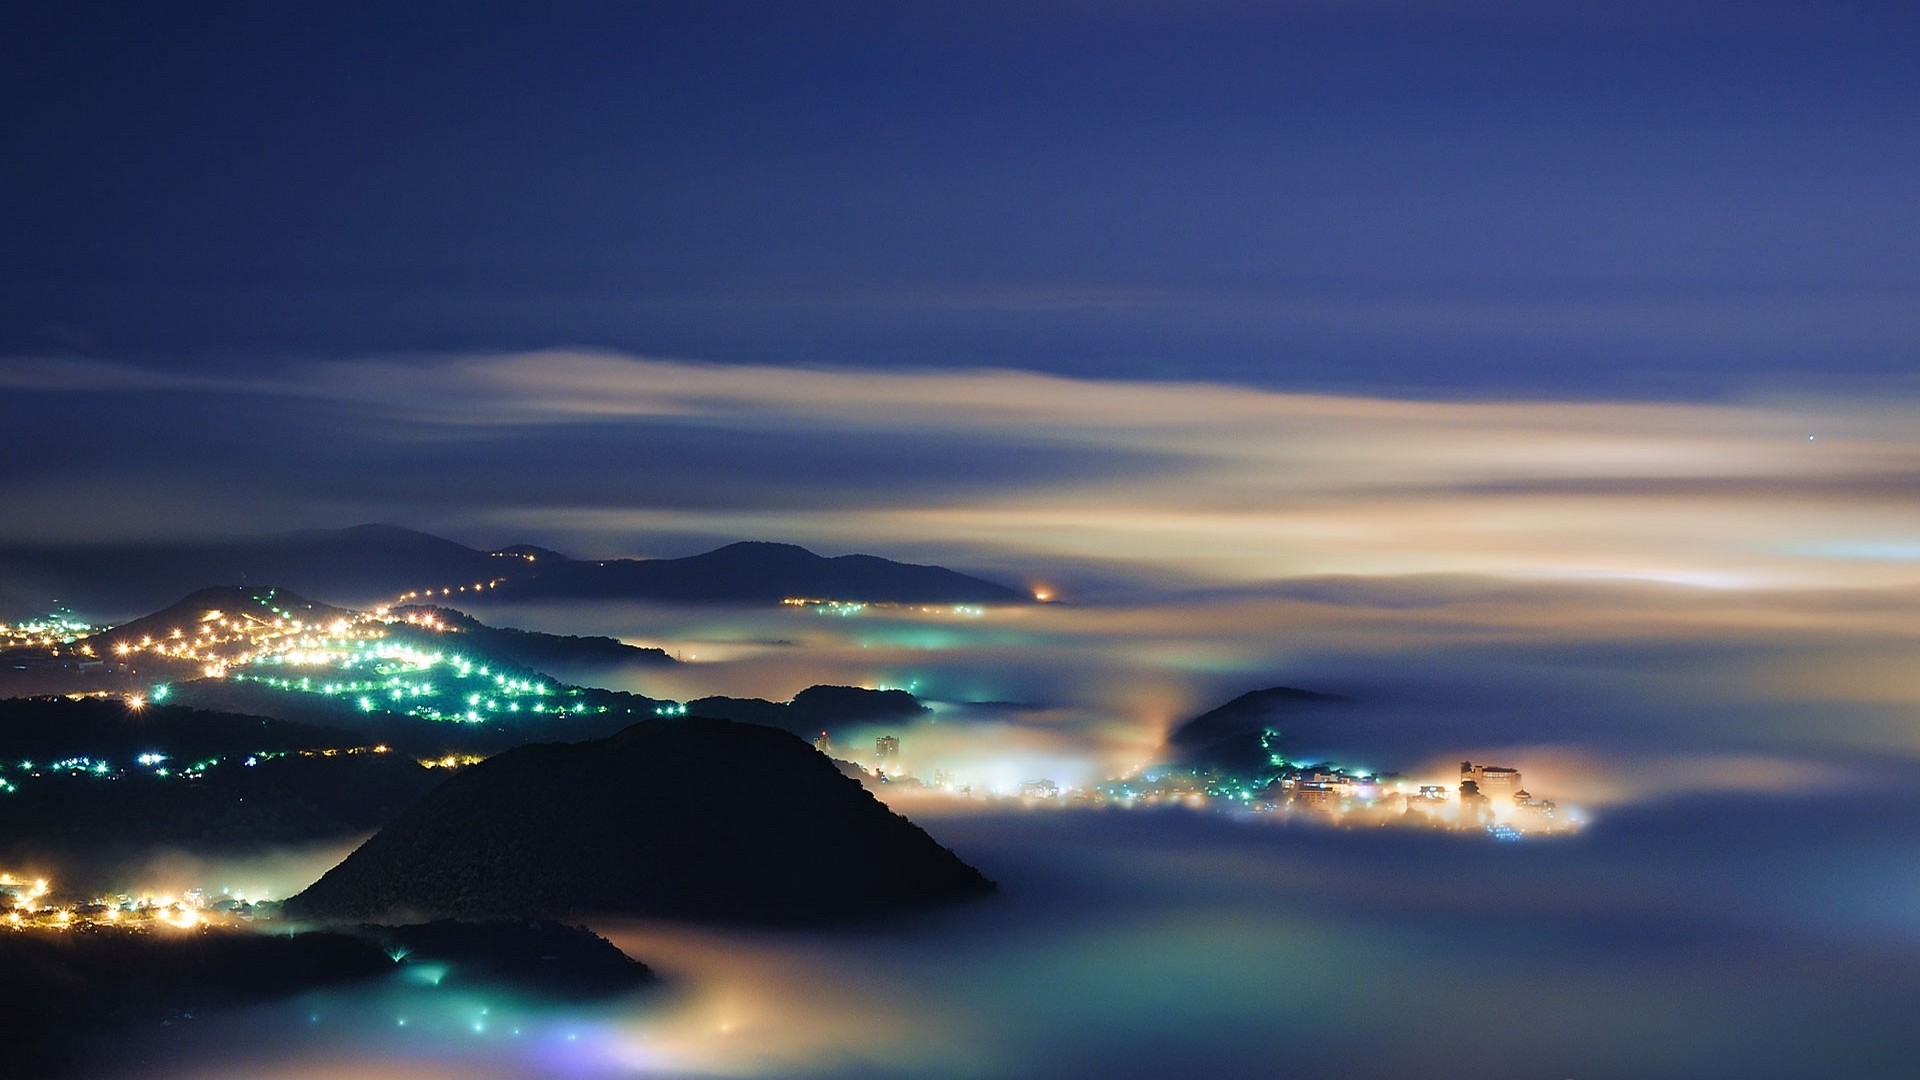 General 1920x1080 nature landscape evening lights city mist Taipei mountains clouds night city lights cyan hills